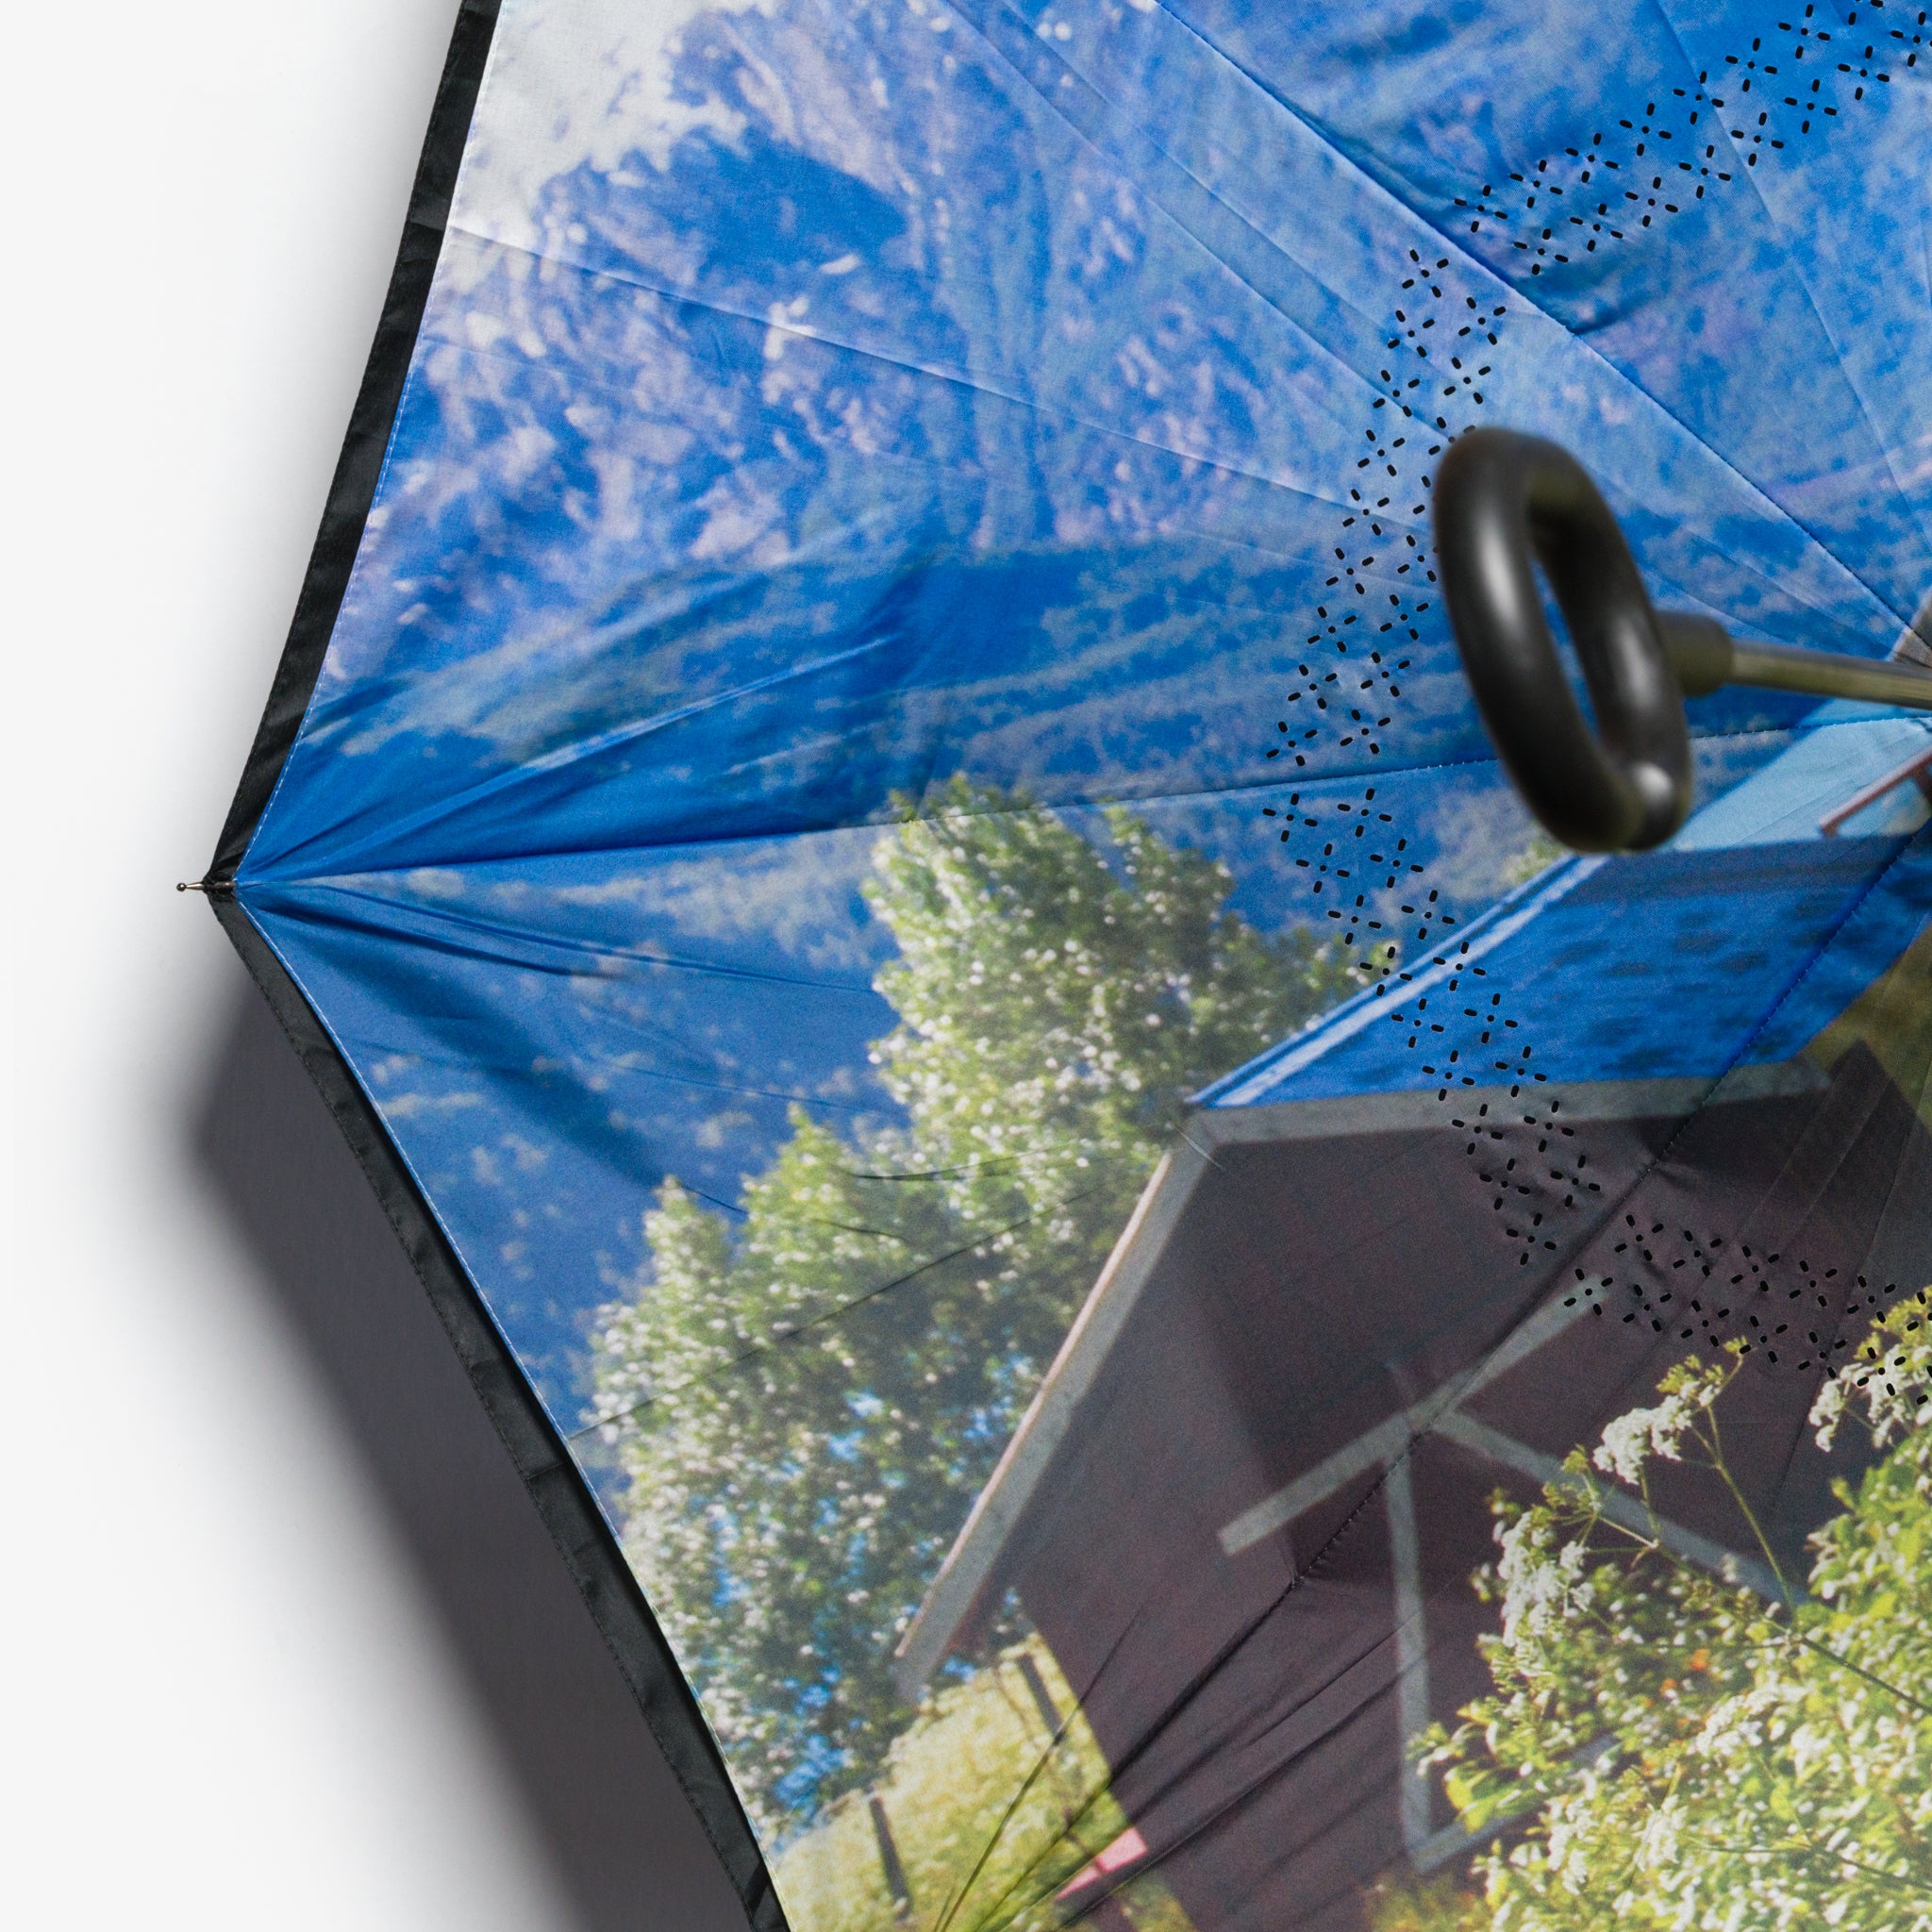 Barn Umbrella by Susan Fosse of Norway